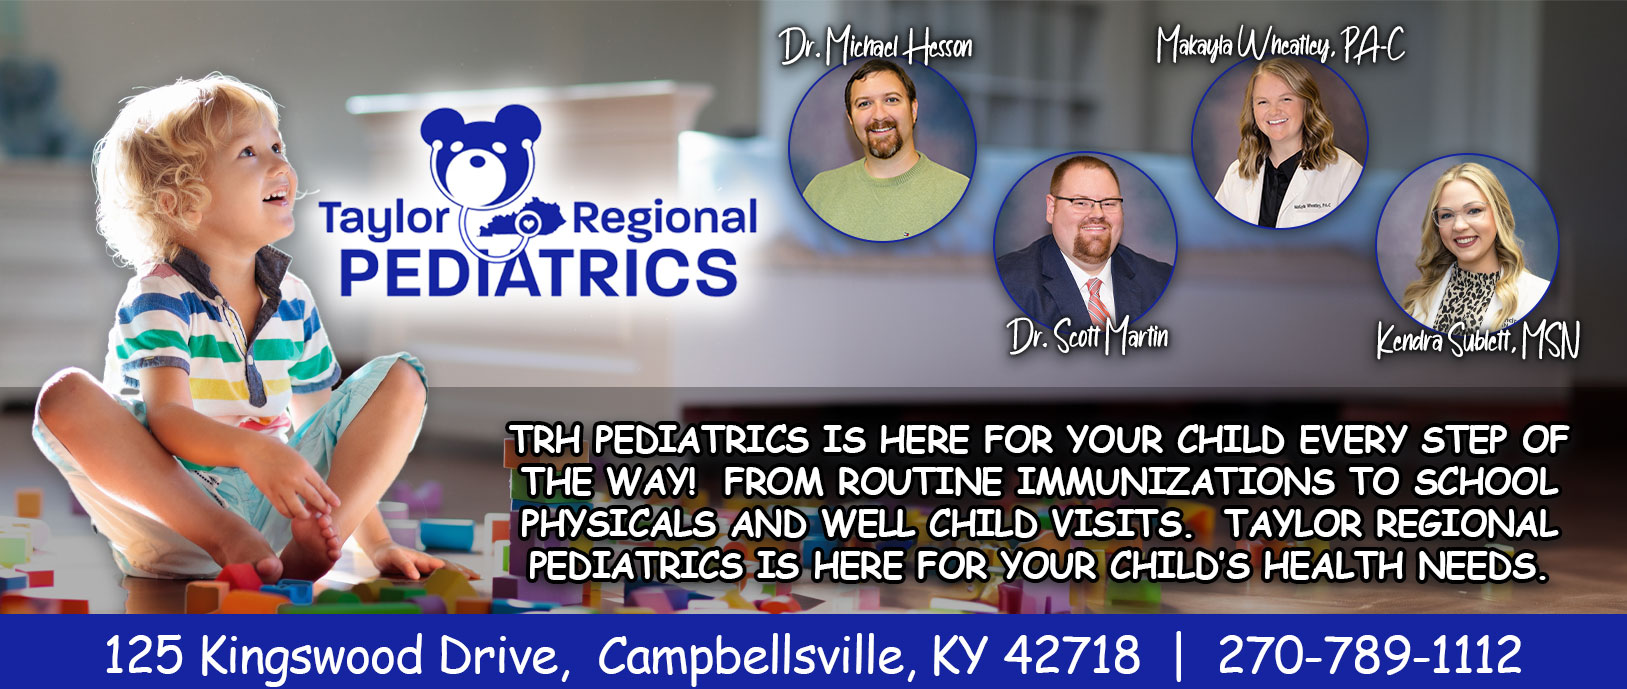 taylor pediatrics providers